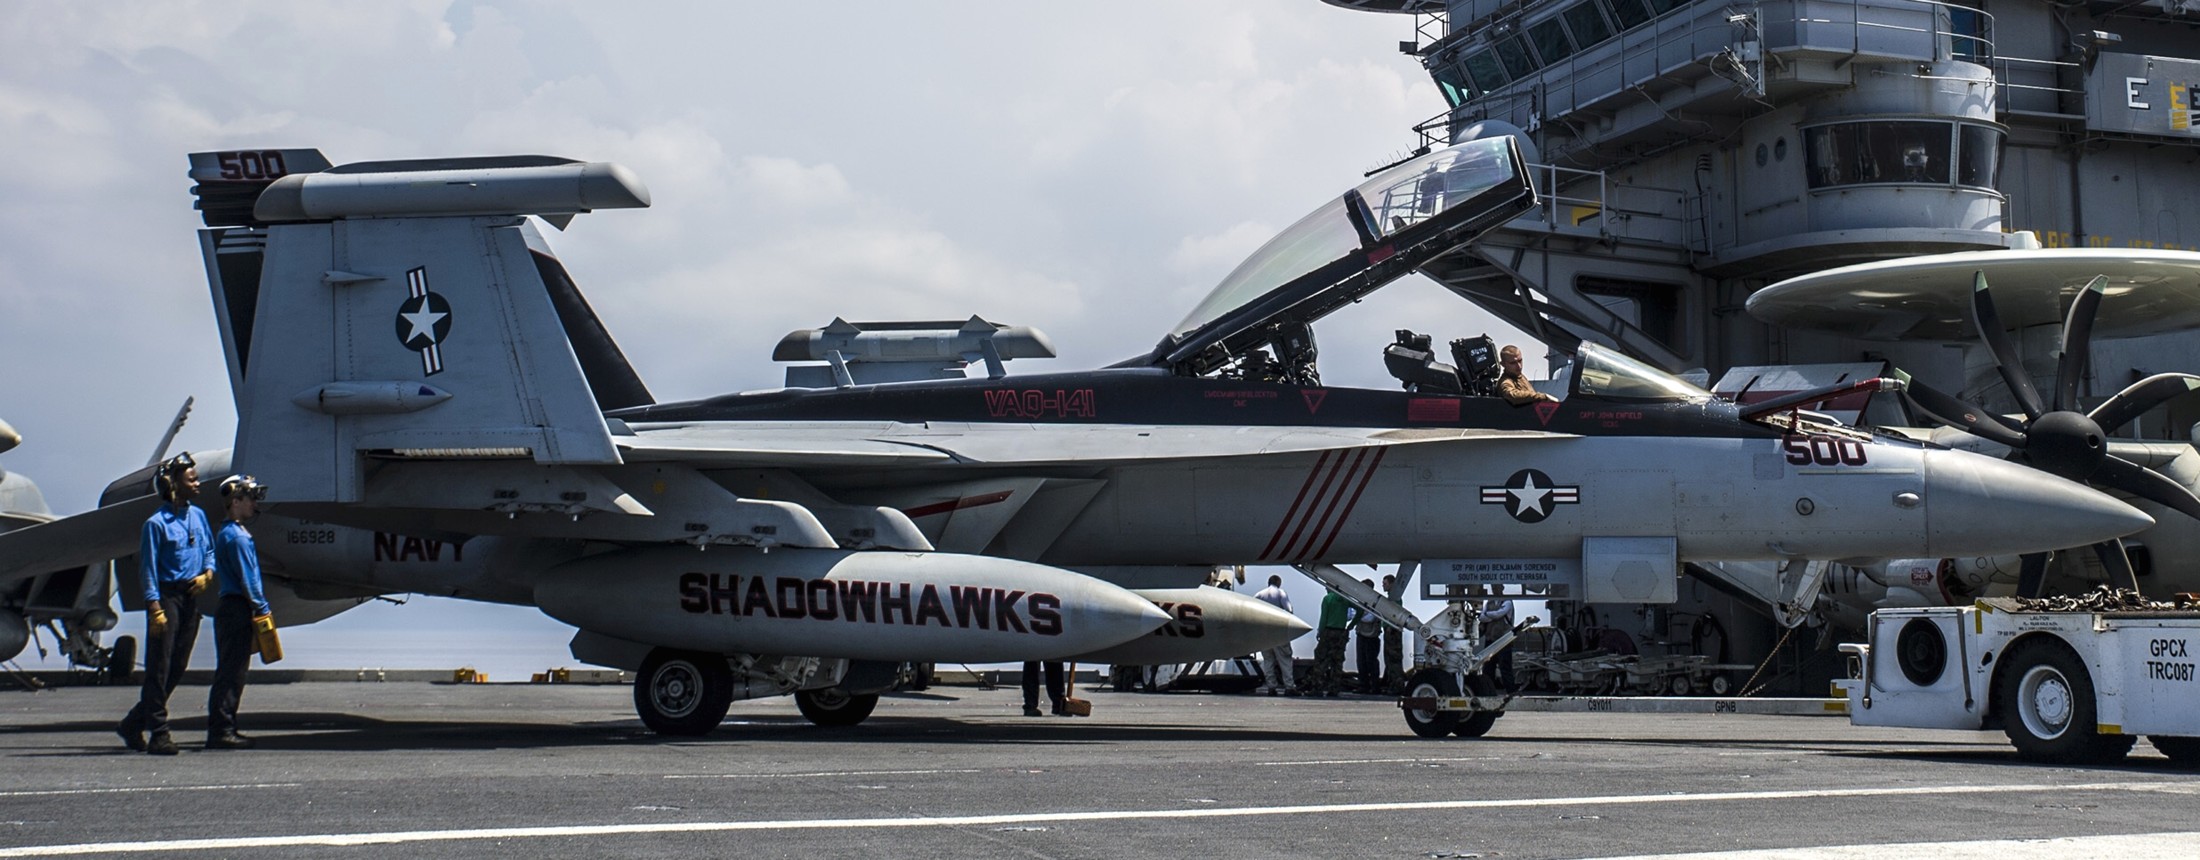 vaq-141 shadowhawks electronic attack squadron boeing ea-18g growler us navy cvw-5 uss george washington cvn-73 49